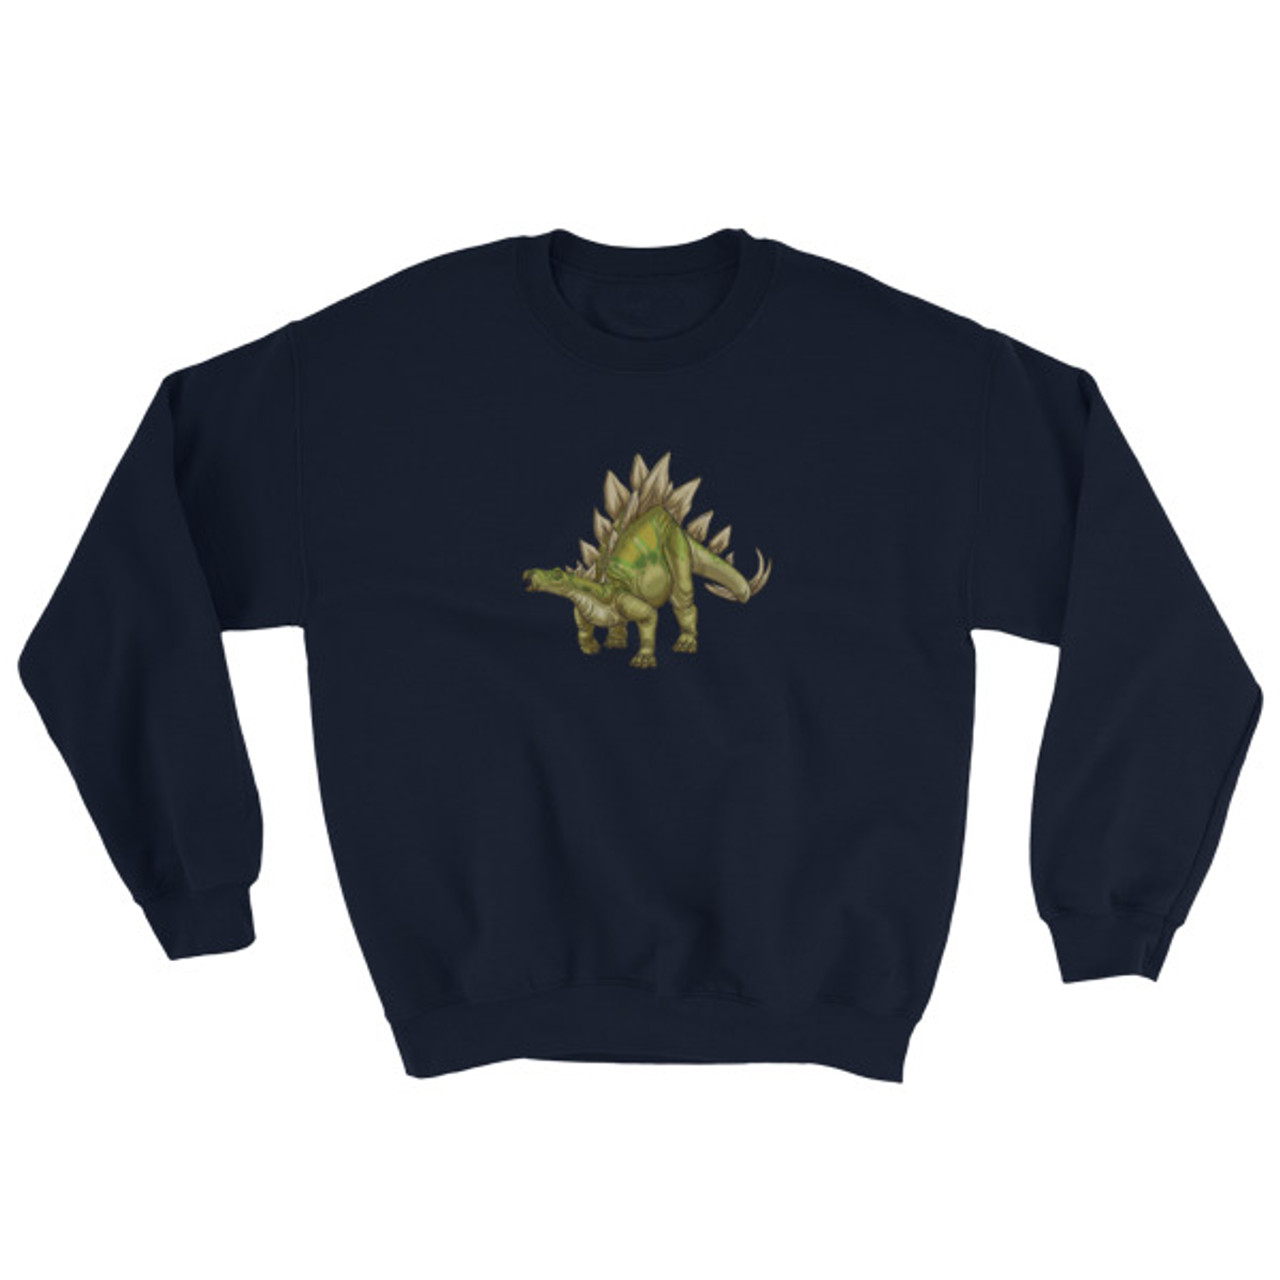 Stegosaurus Sweatshirt - The Dino Reserve